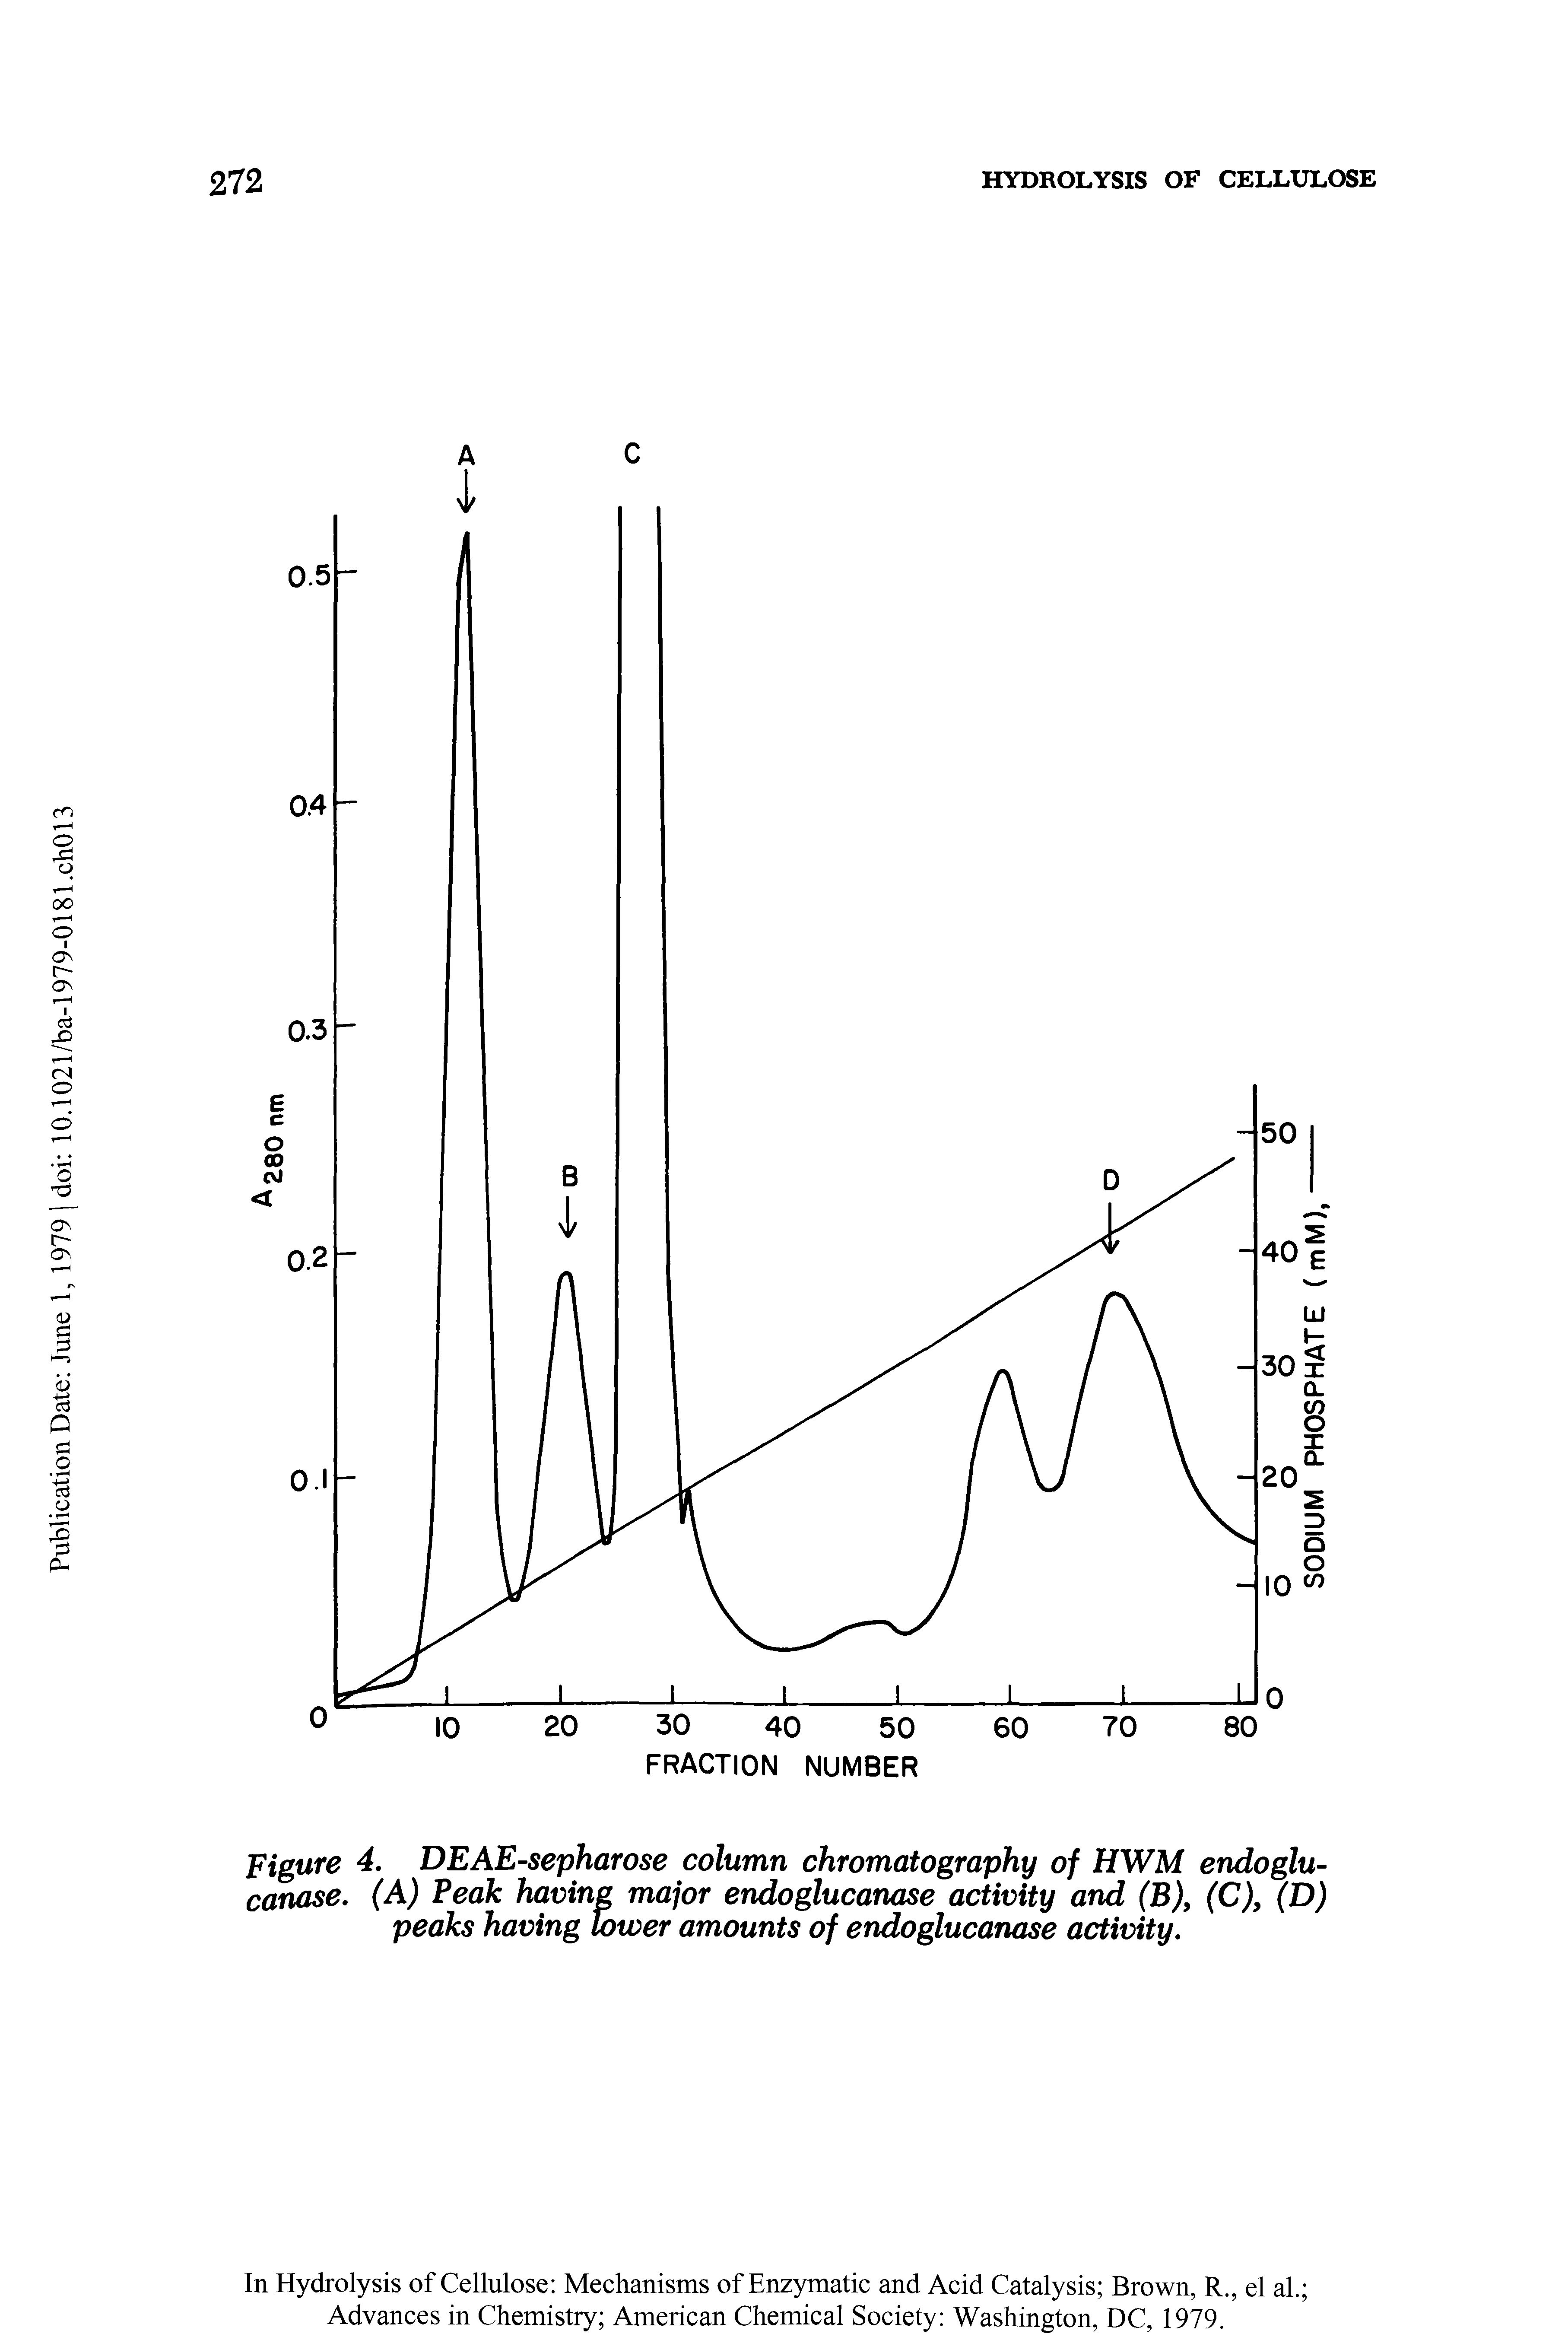 Figure 4. DEAE-sepharose column chromatography of HWM endoglu-canase. (A) Peak having major endoglucanase activity and (B), (C), (D) peaks having lower amounts of endoglucanase activity.